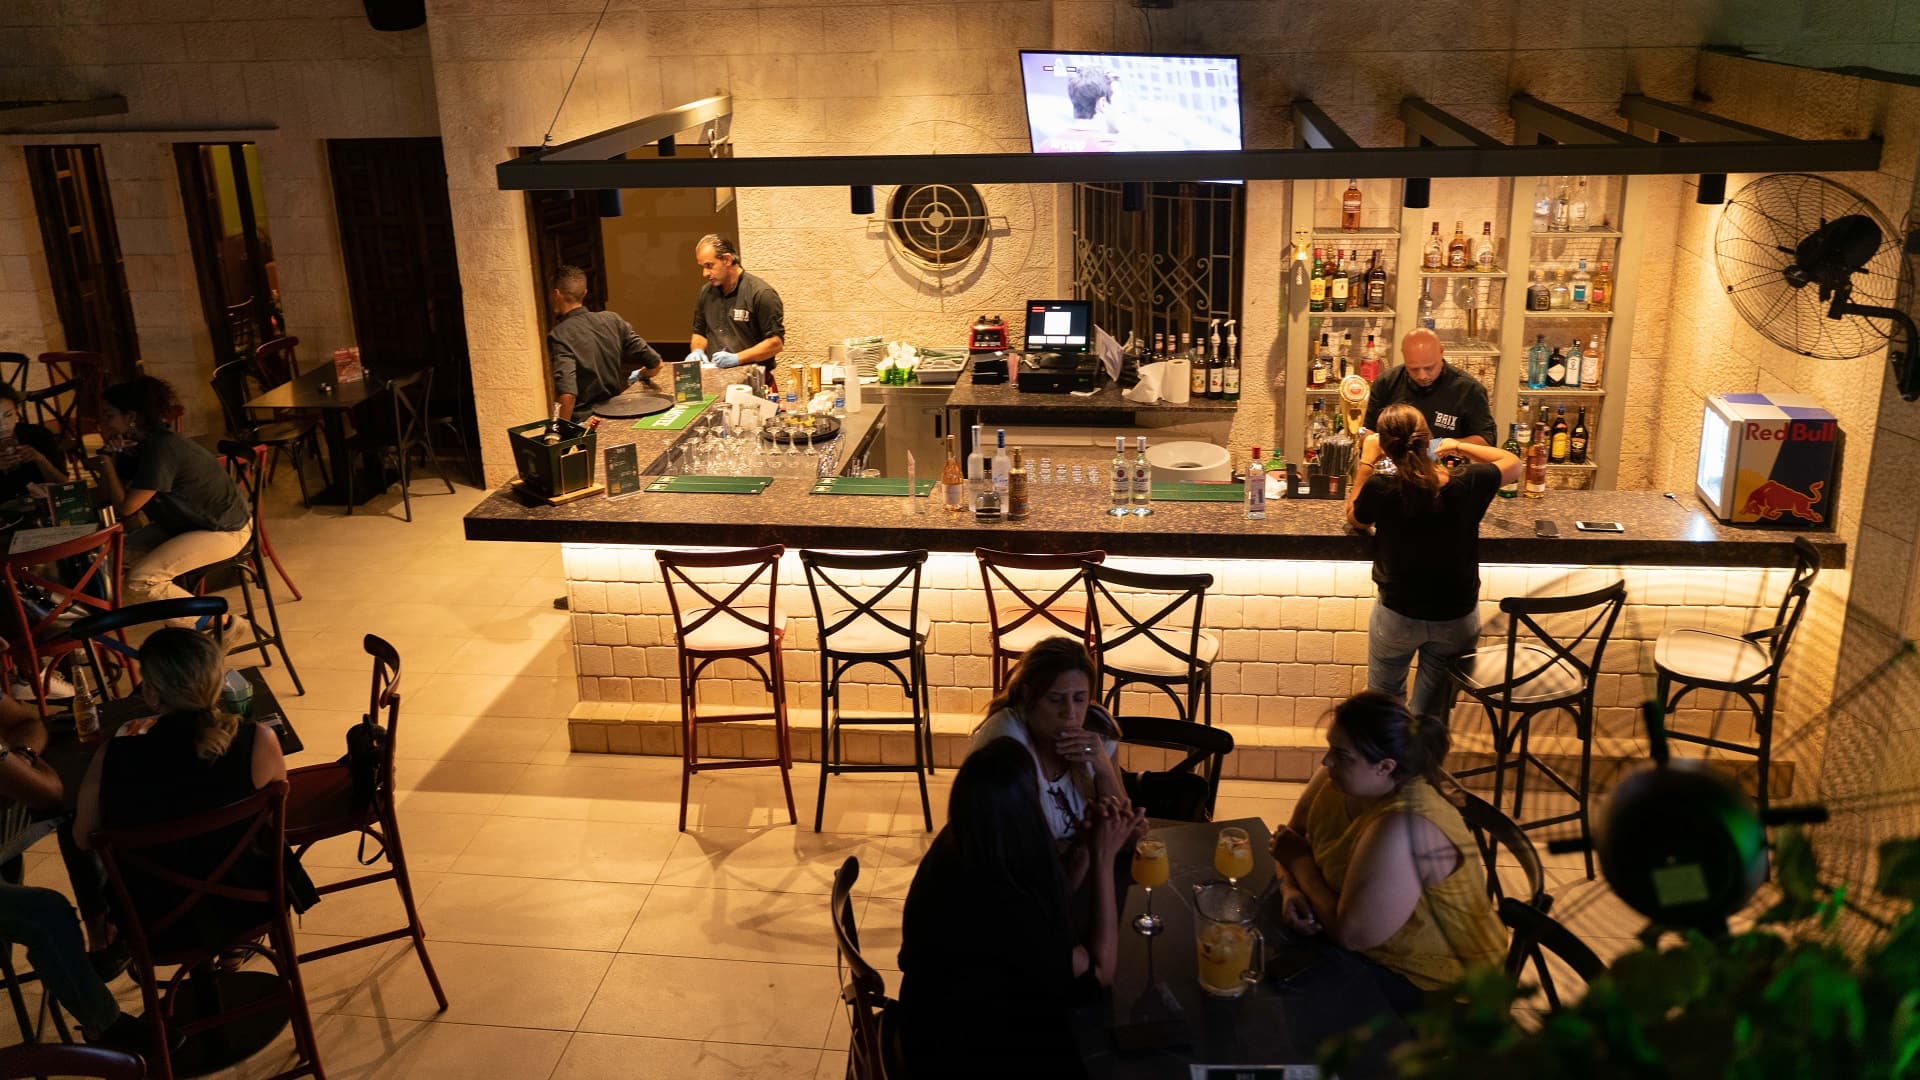 La più calda Coppa del Mondo FIFA Qatar 2022 Sports Restaurant Cafe Bar Club Beer Hall